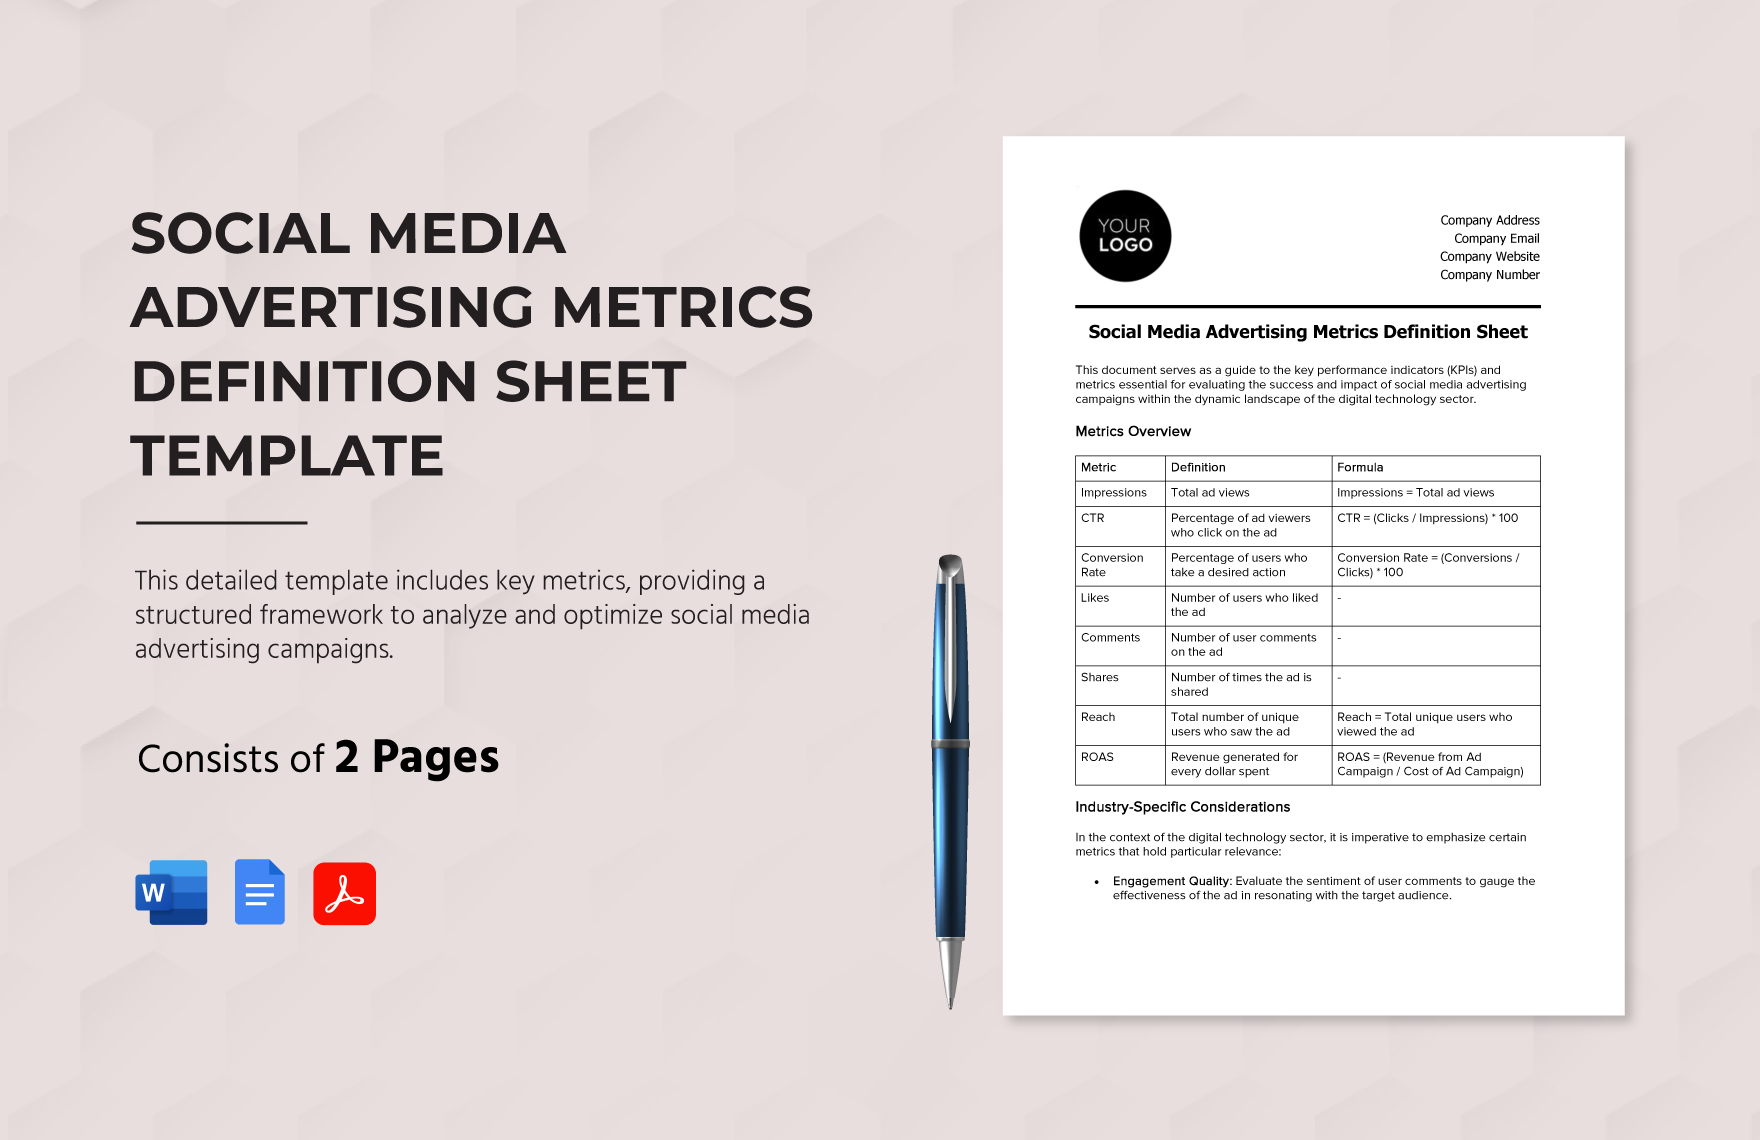 Social Media Advertising Metrics Definition Sheet Template in Word, Google Docs, PDF